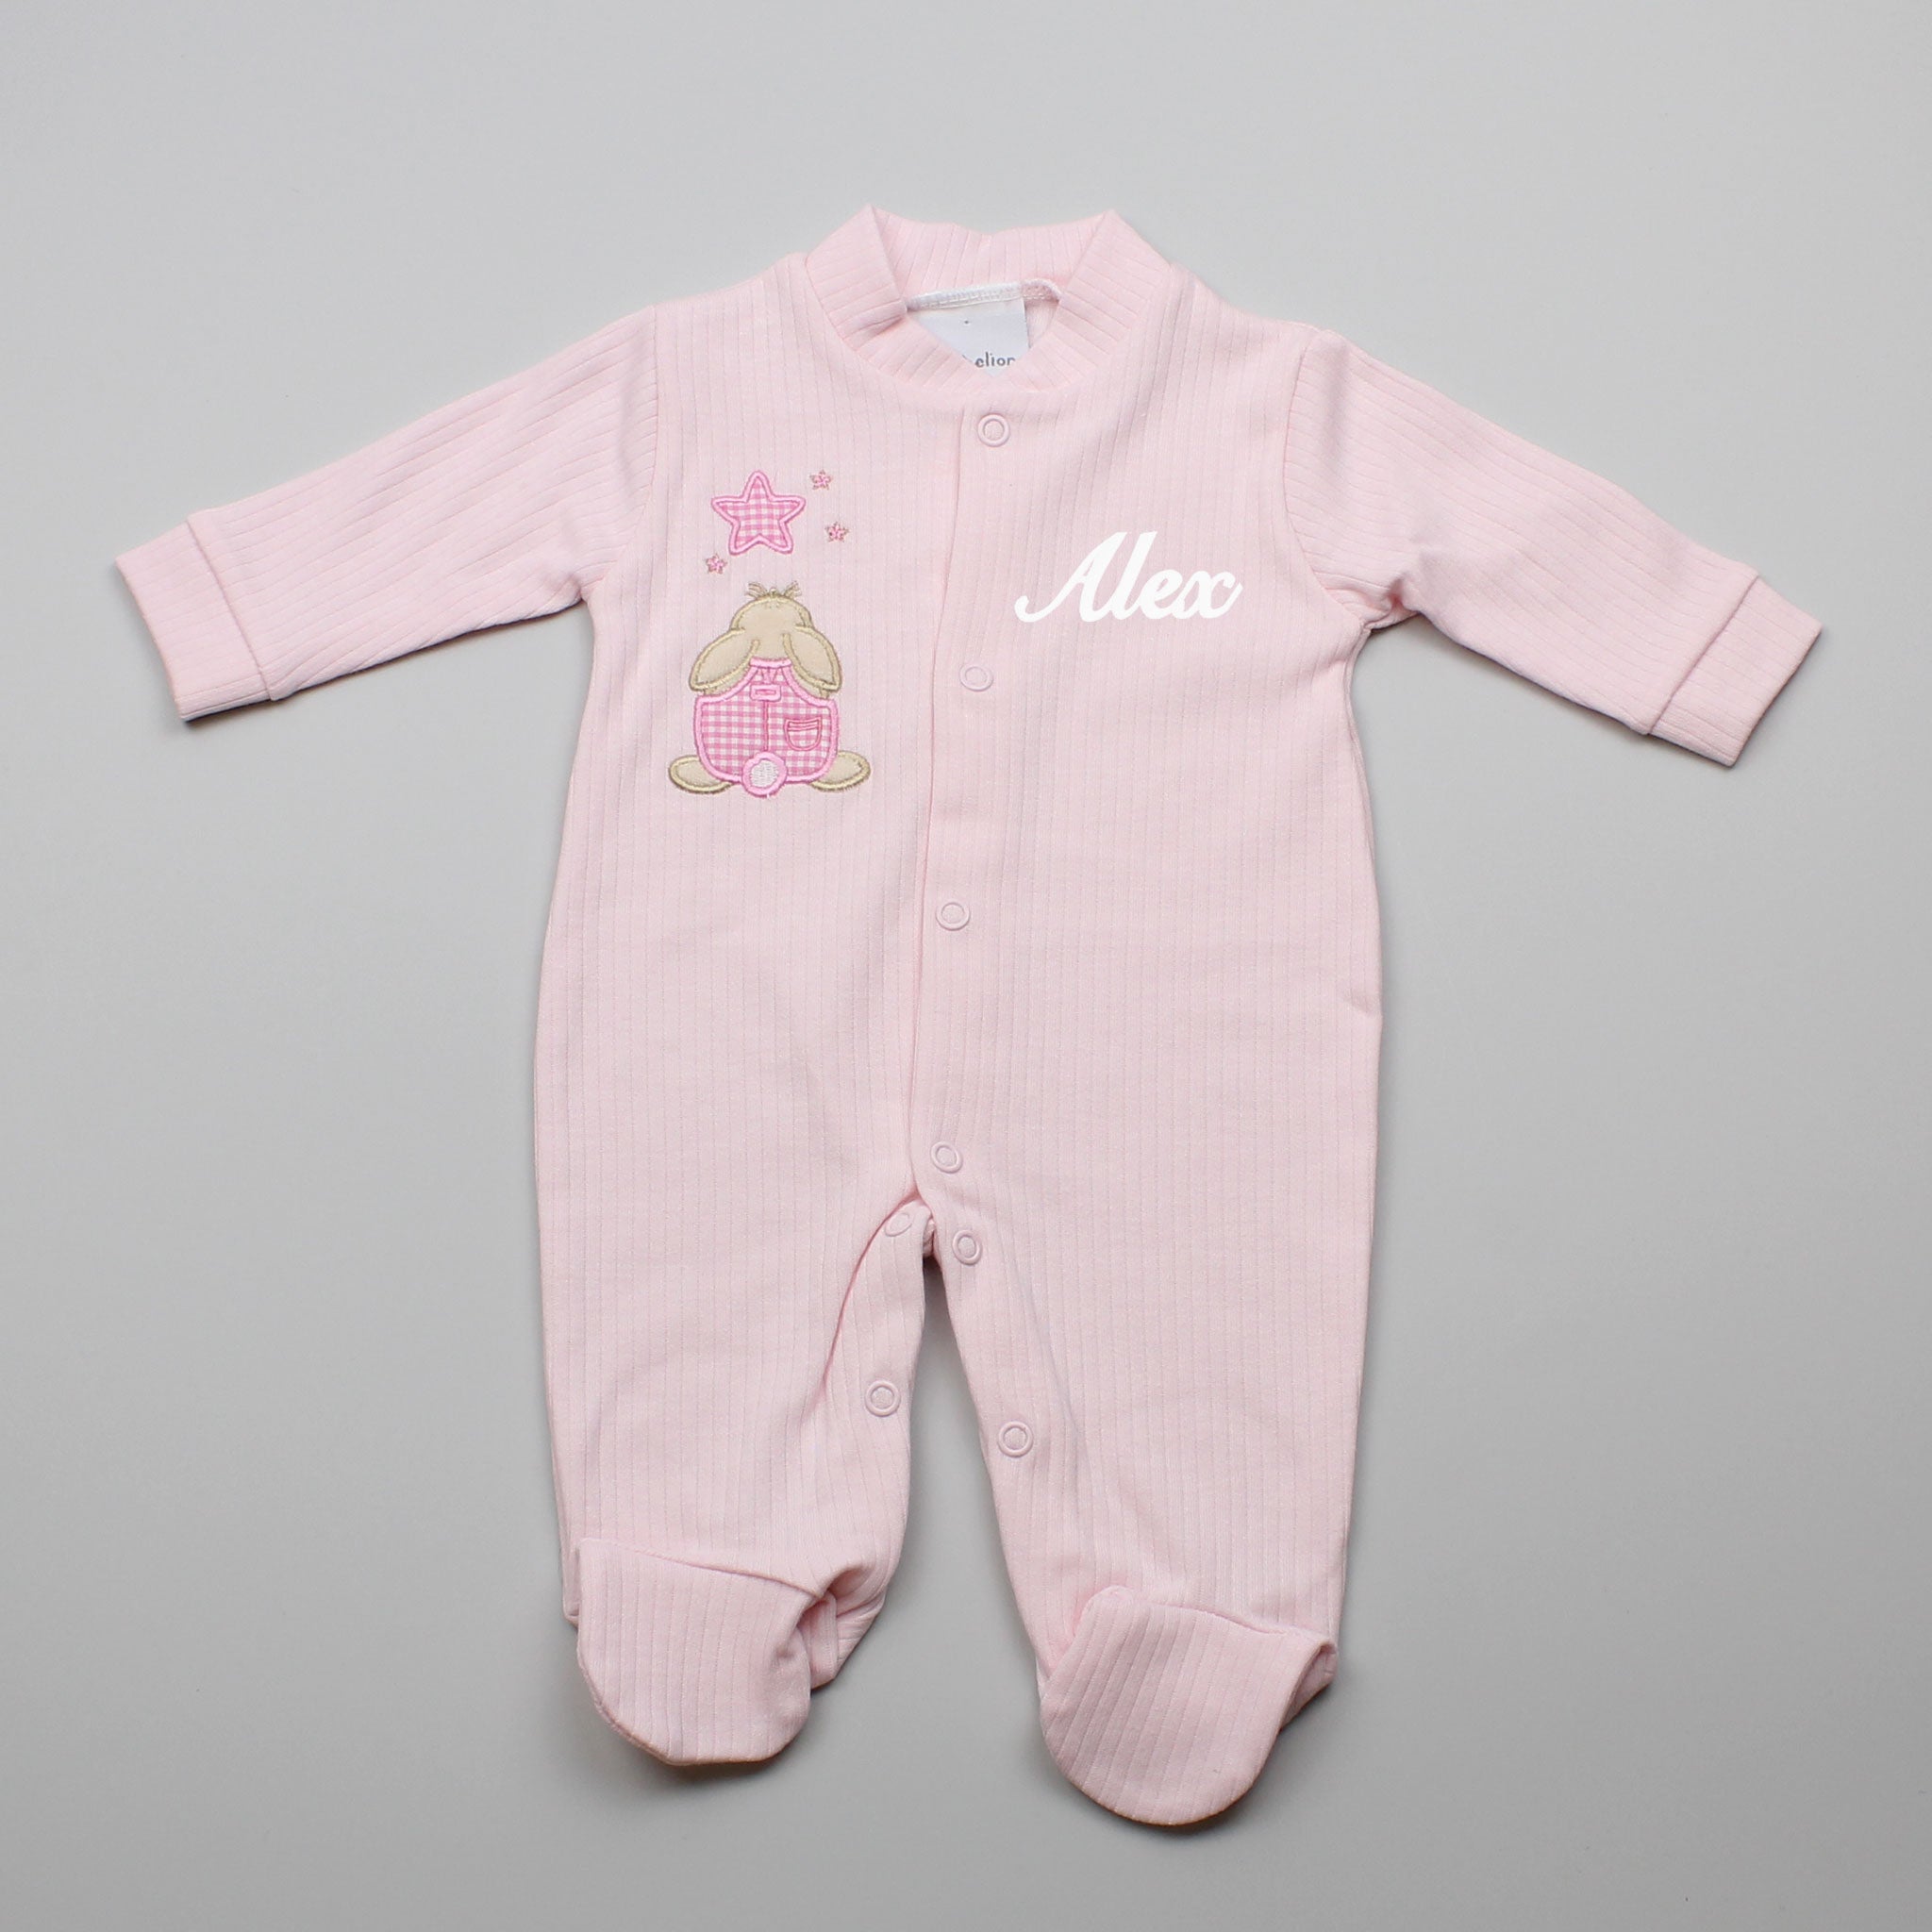 Personalised Baby Girls Sleepsuit - Pink - Applique Rabbit